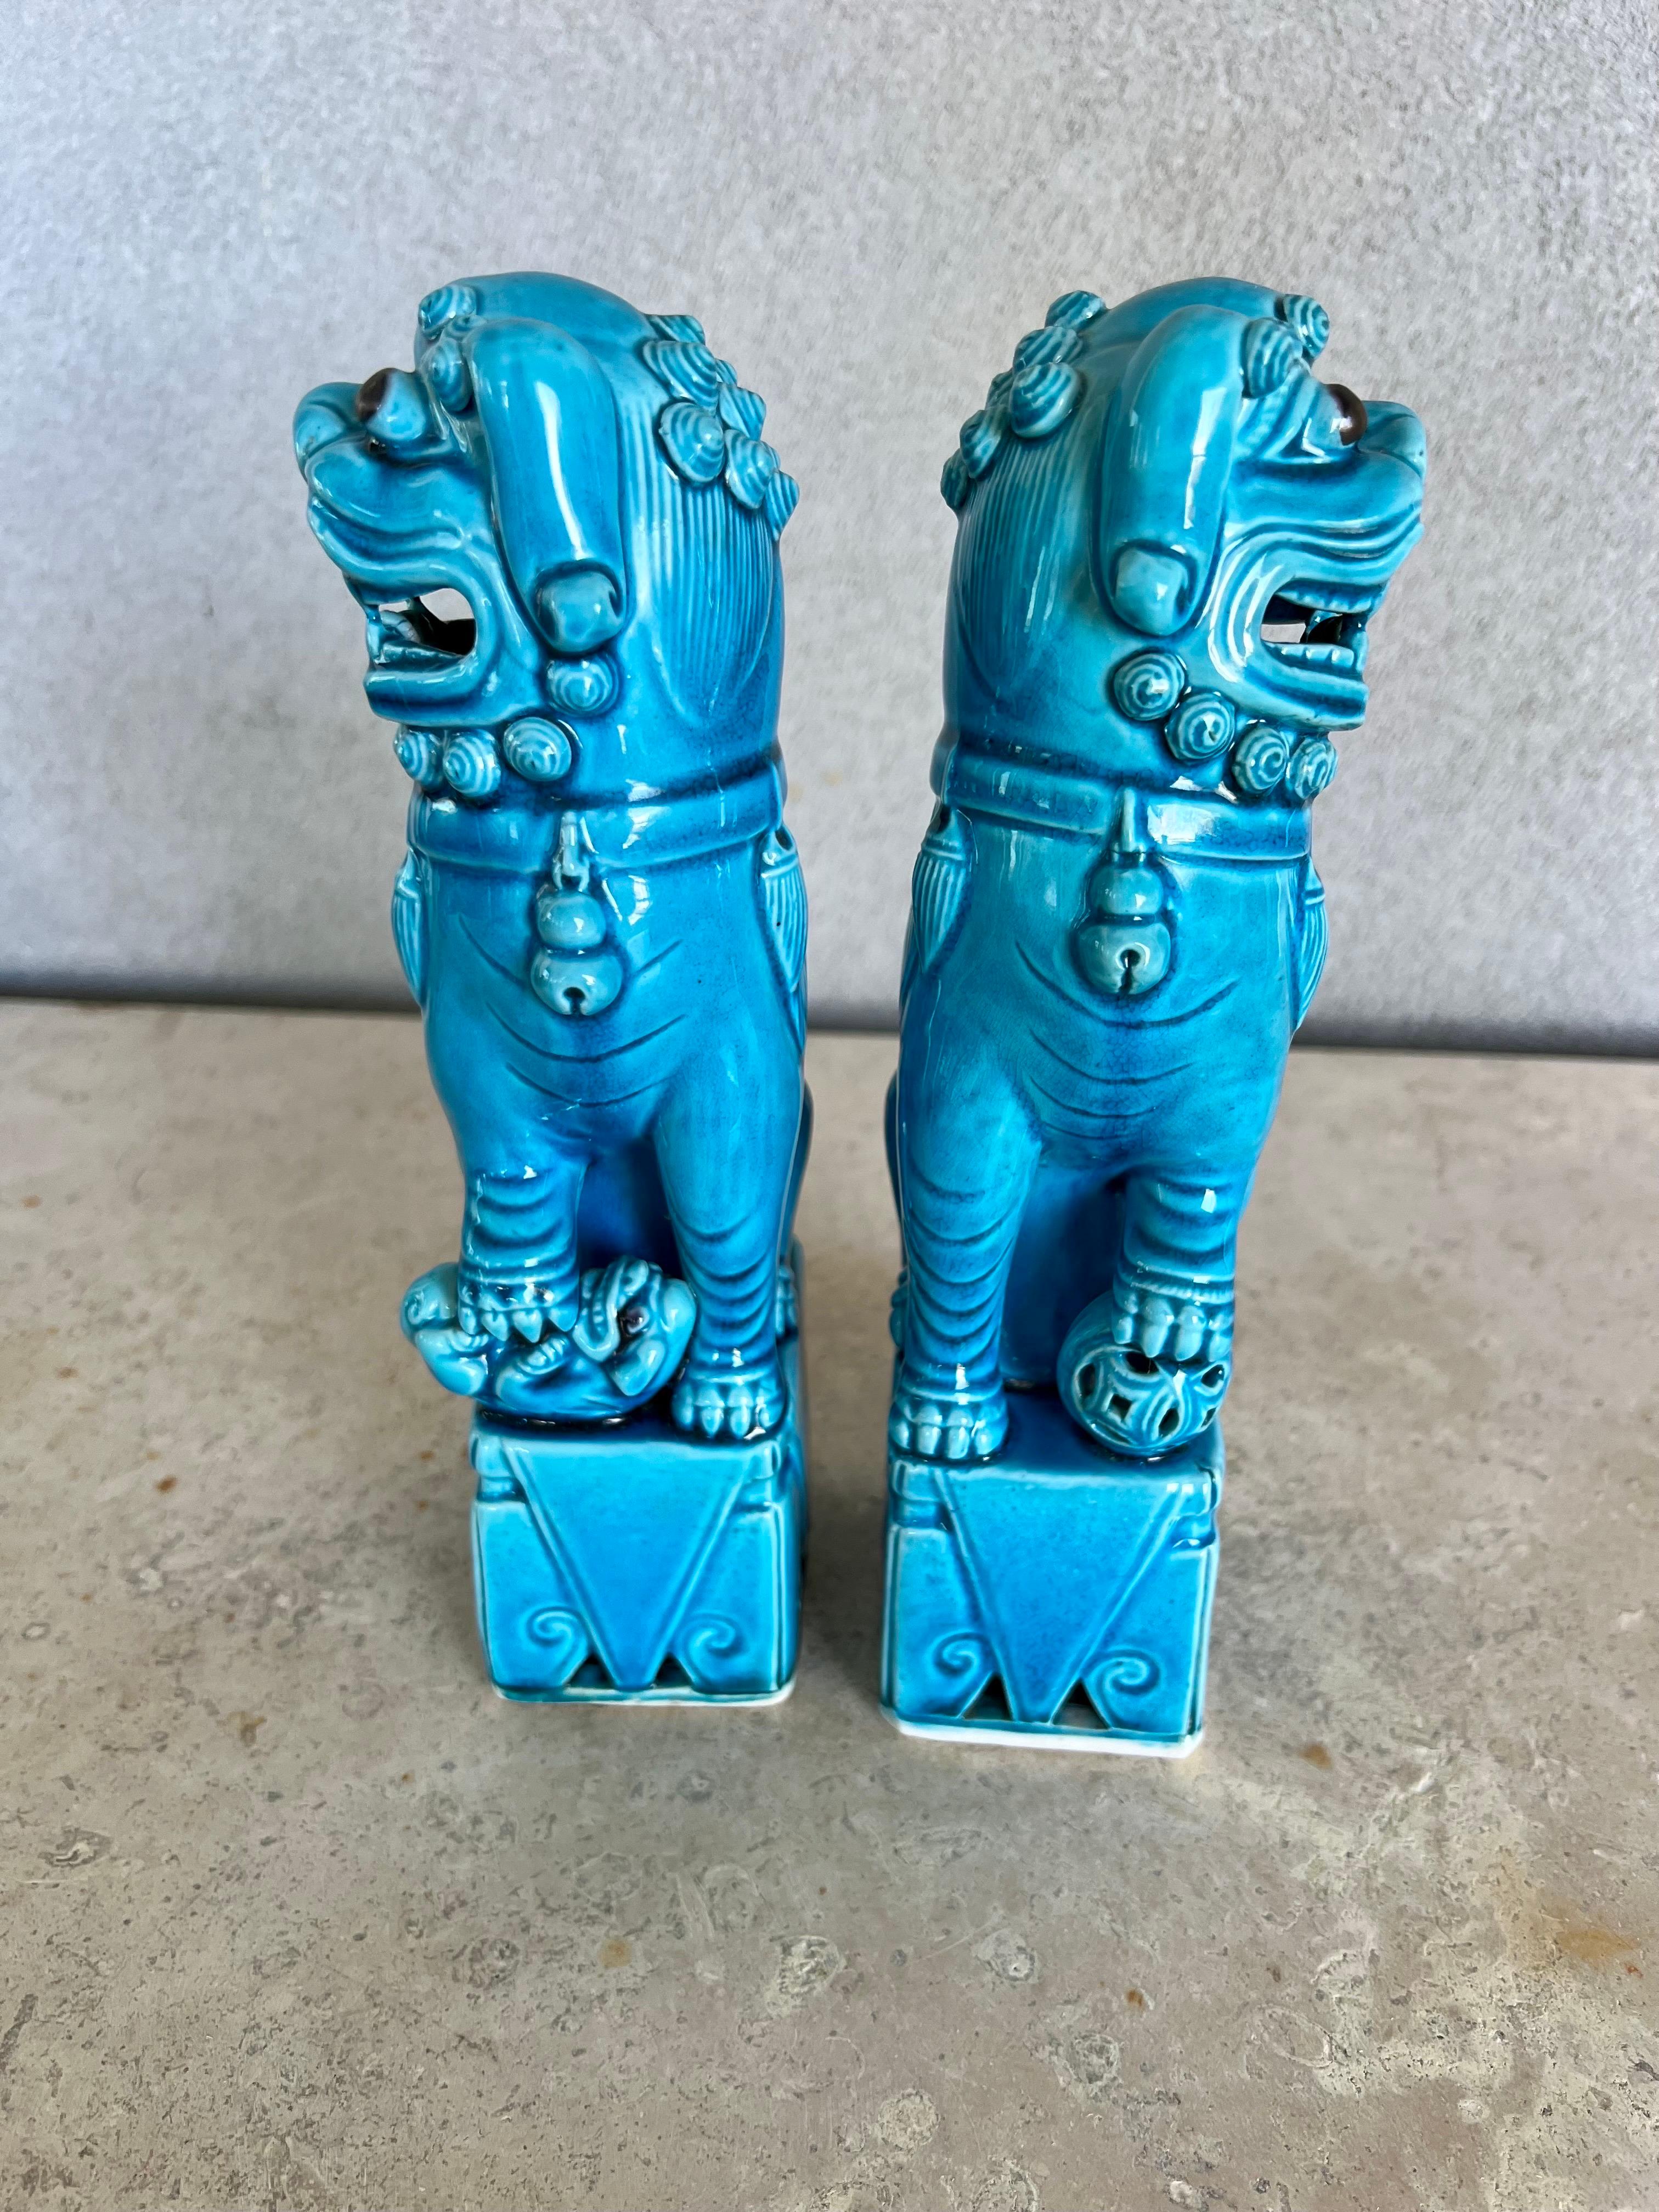 Glazed Chinese Foo Dog statues in turquoise glaze